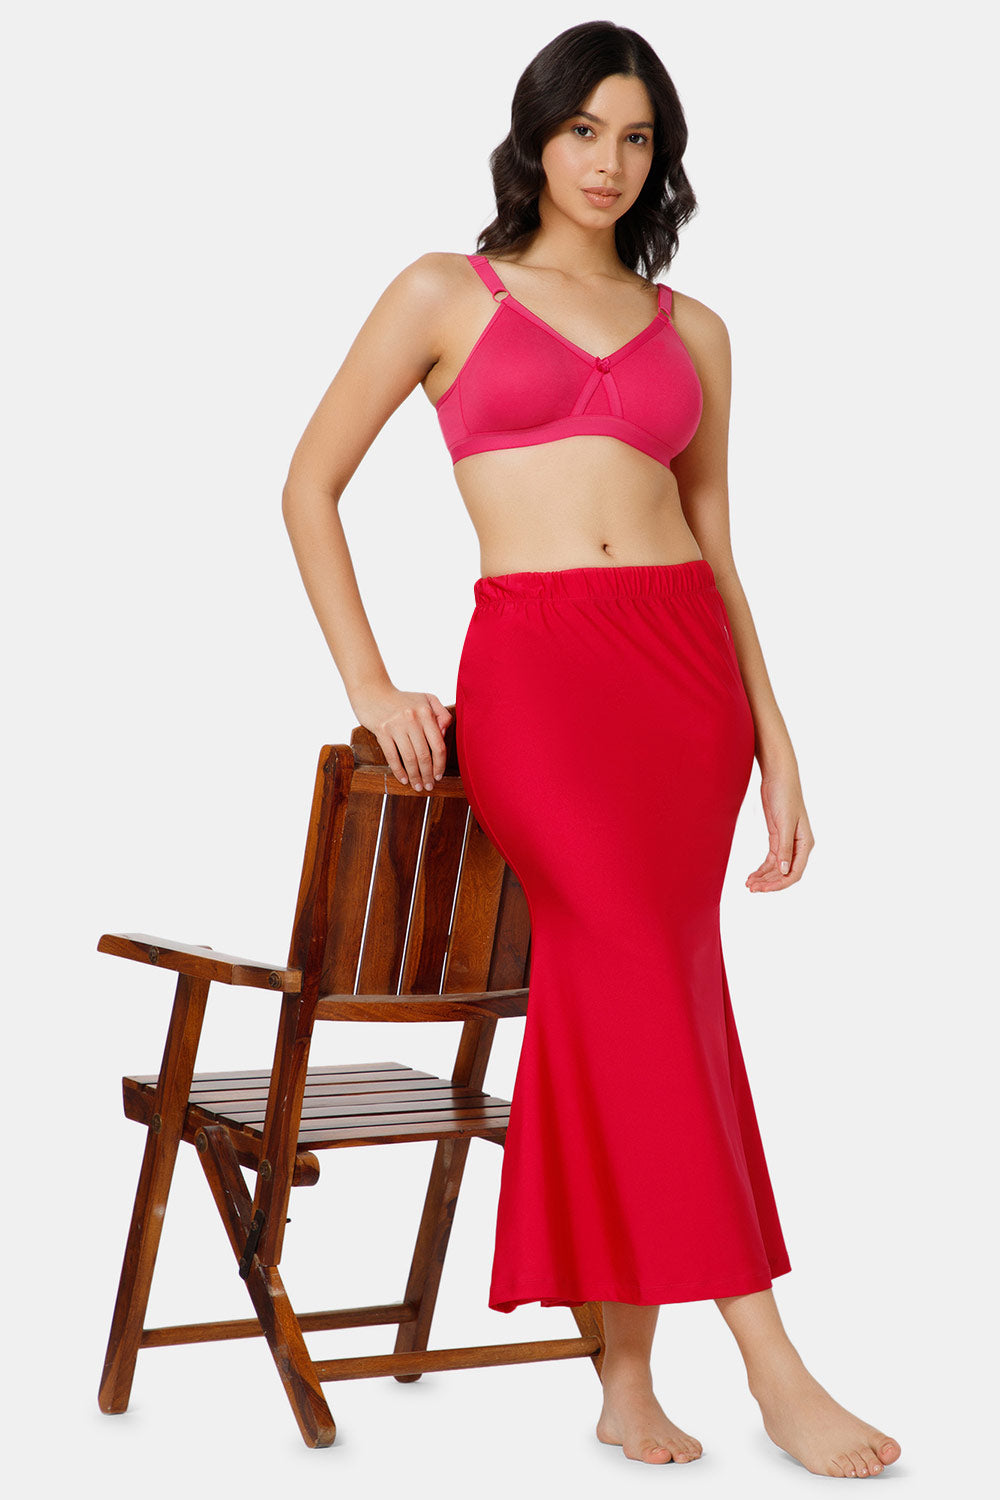 Buy Zivame All Day Seamless Slit Mermaid Saree Shapewear - Rose at